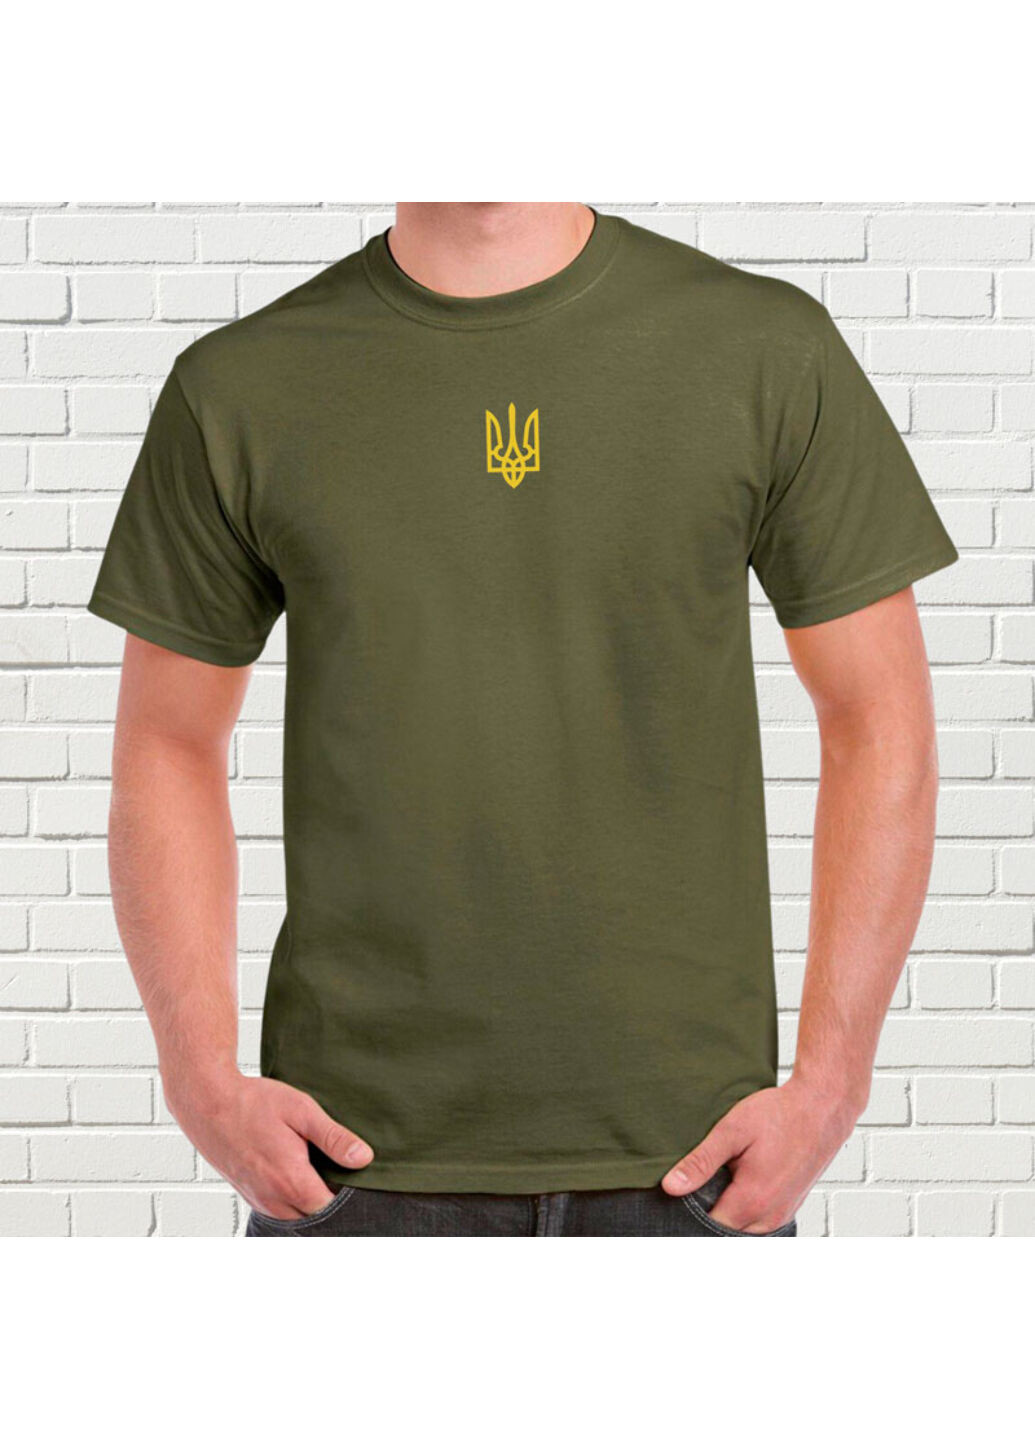 Хаки (оливковая) футболка з вишивкою золотого тризуба мужская хаки s No Brand